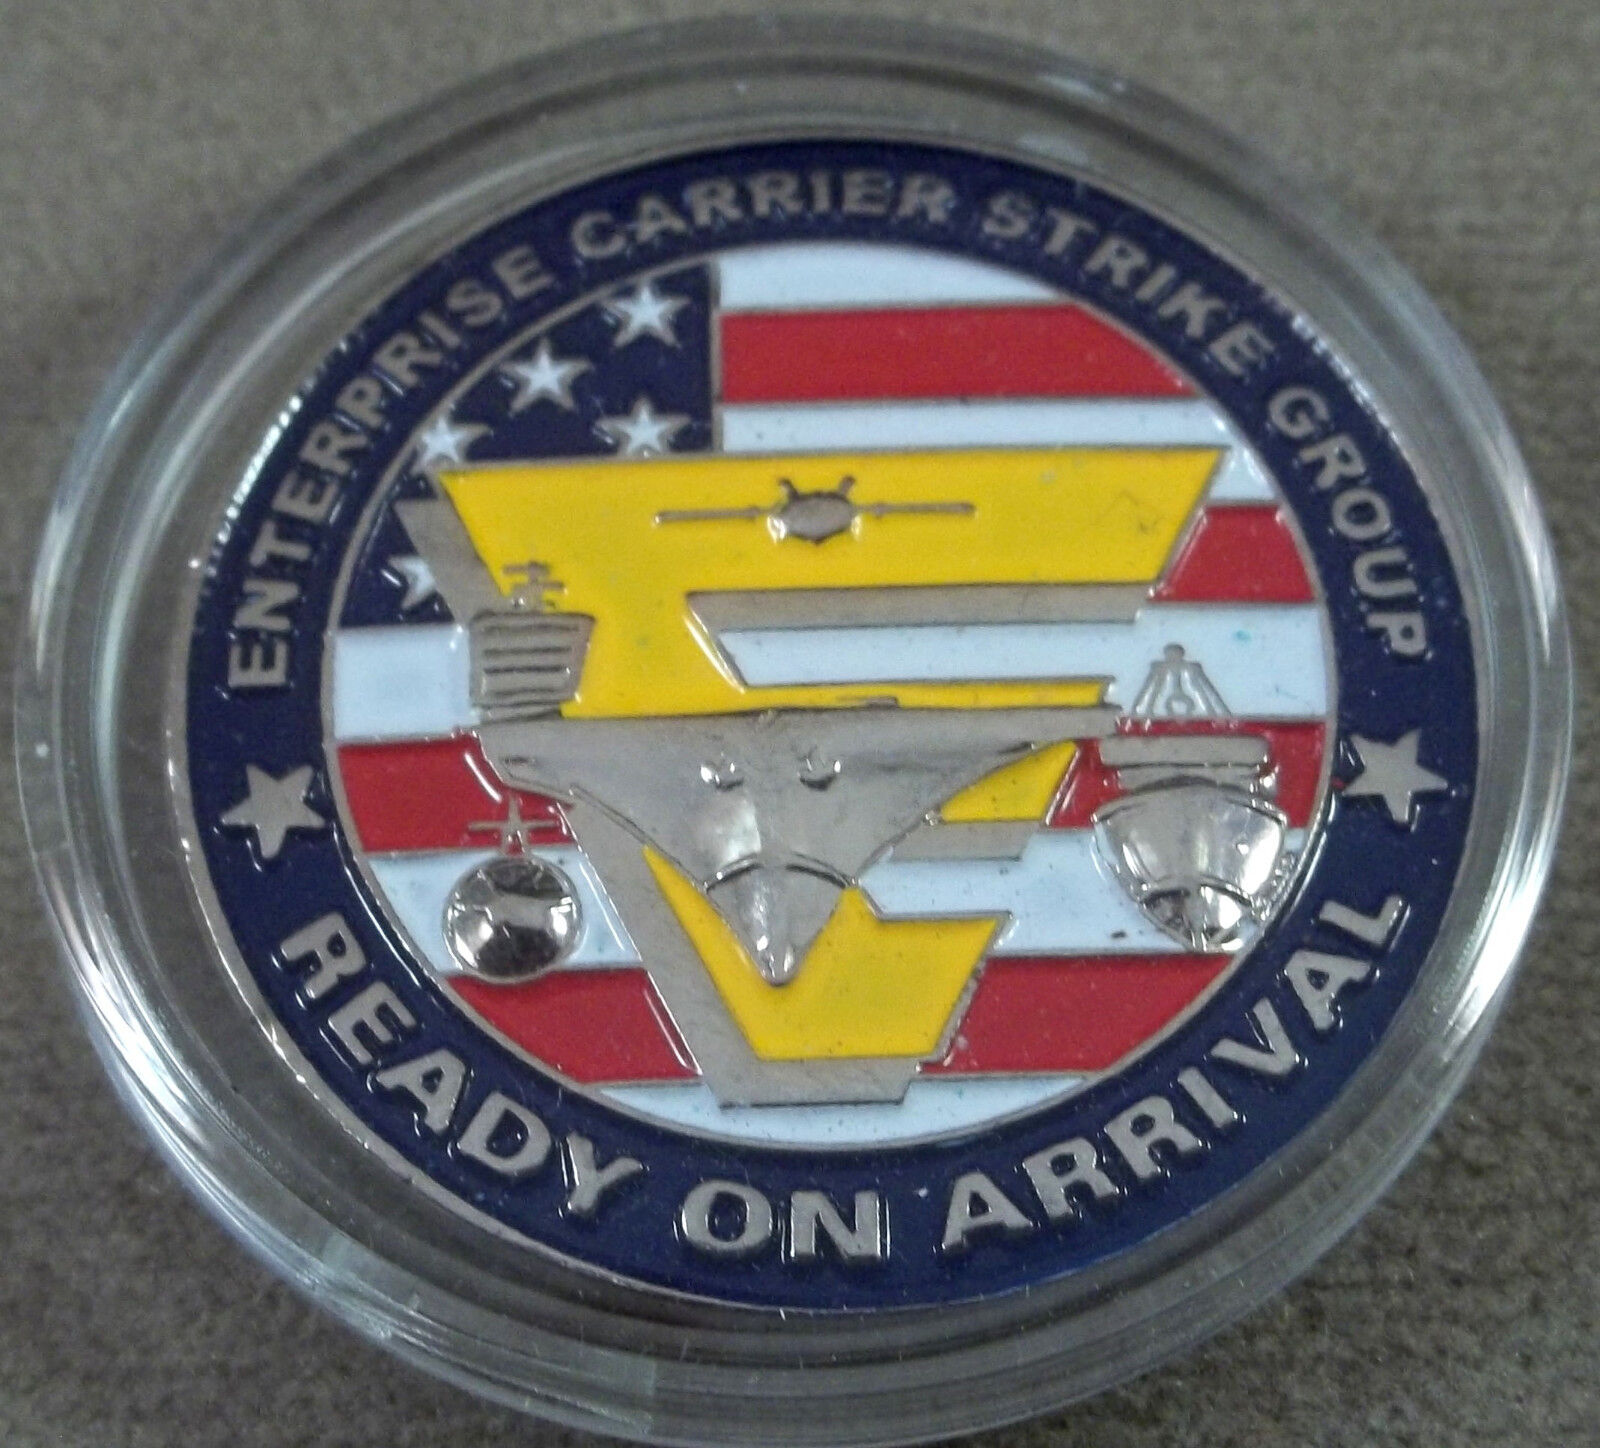 US Navy USS Enterprise CVN - 65 Carrier Strike Group Challenge Coin